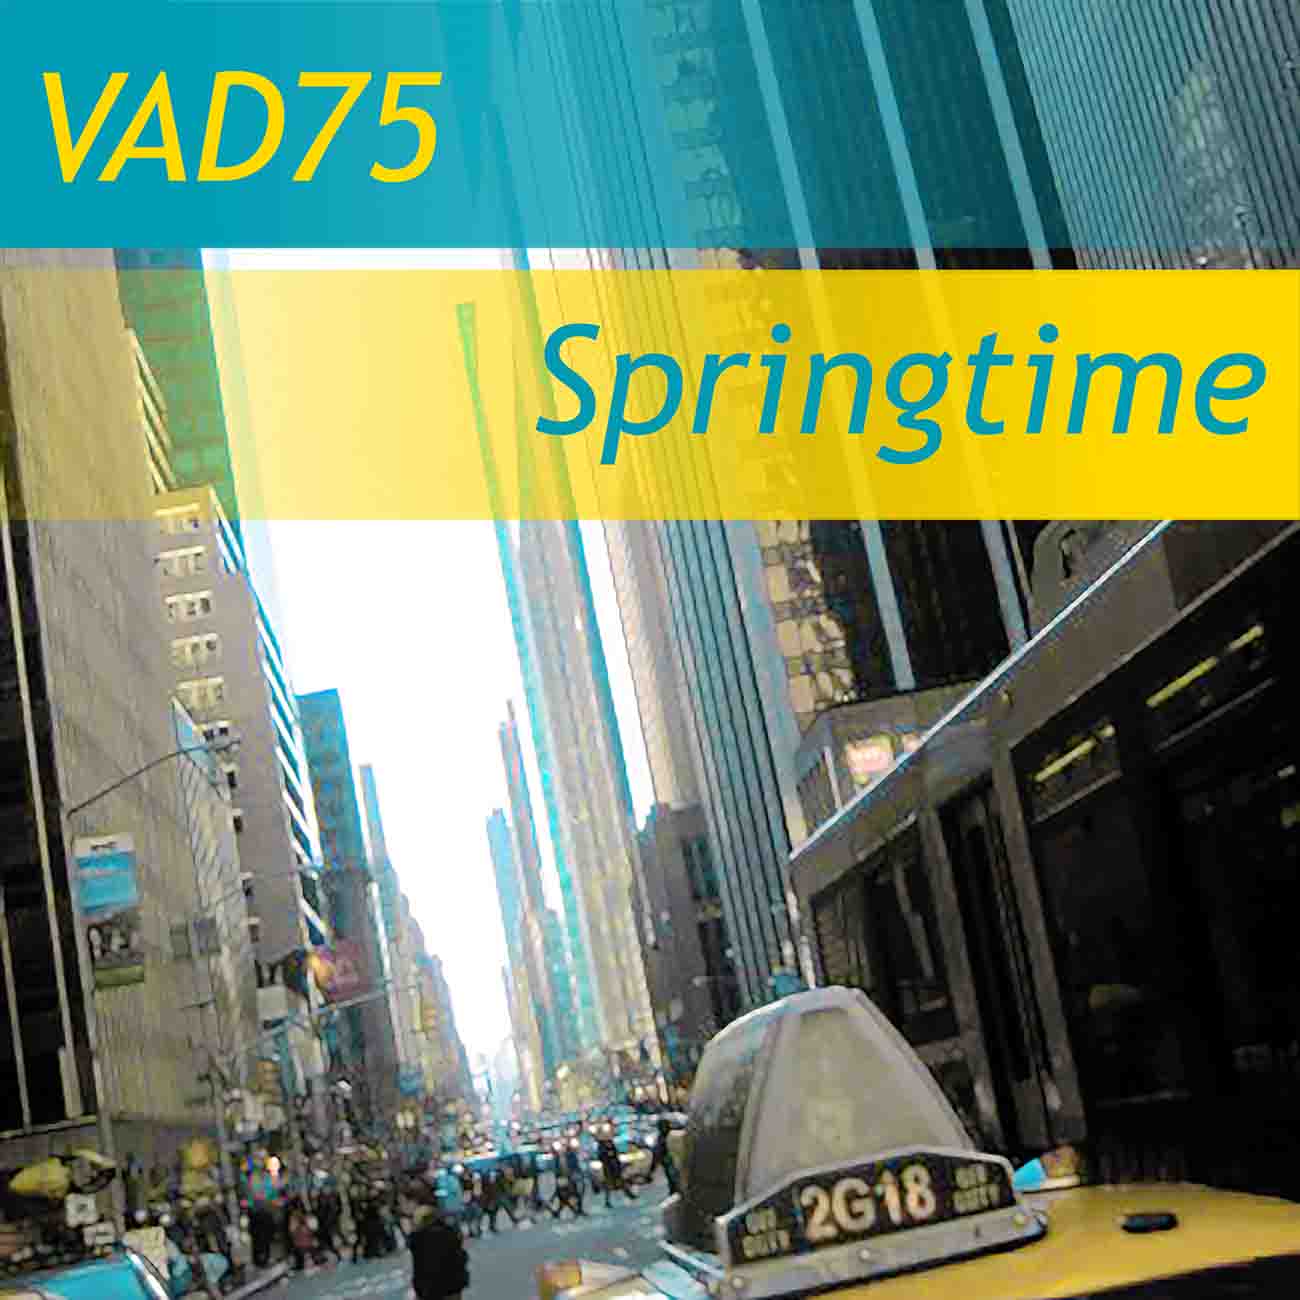 VAD75 - Springtime